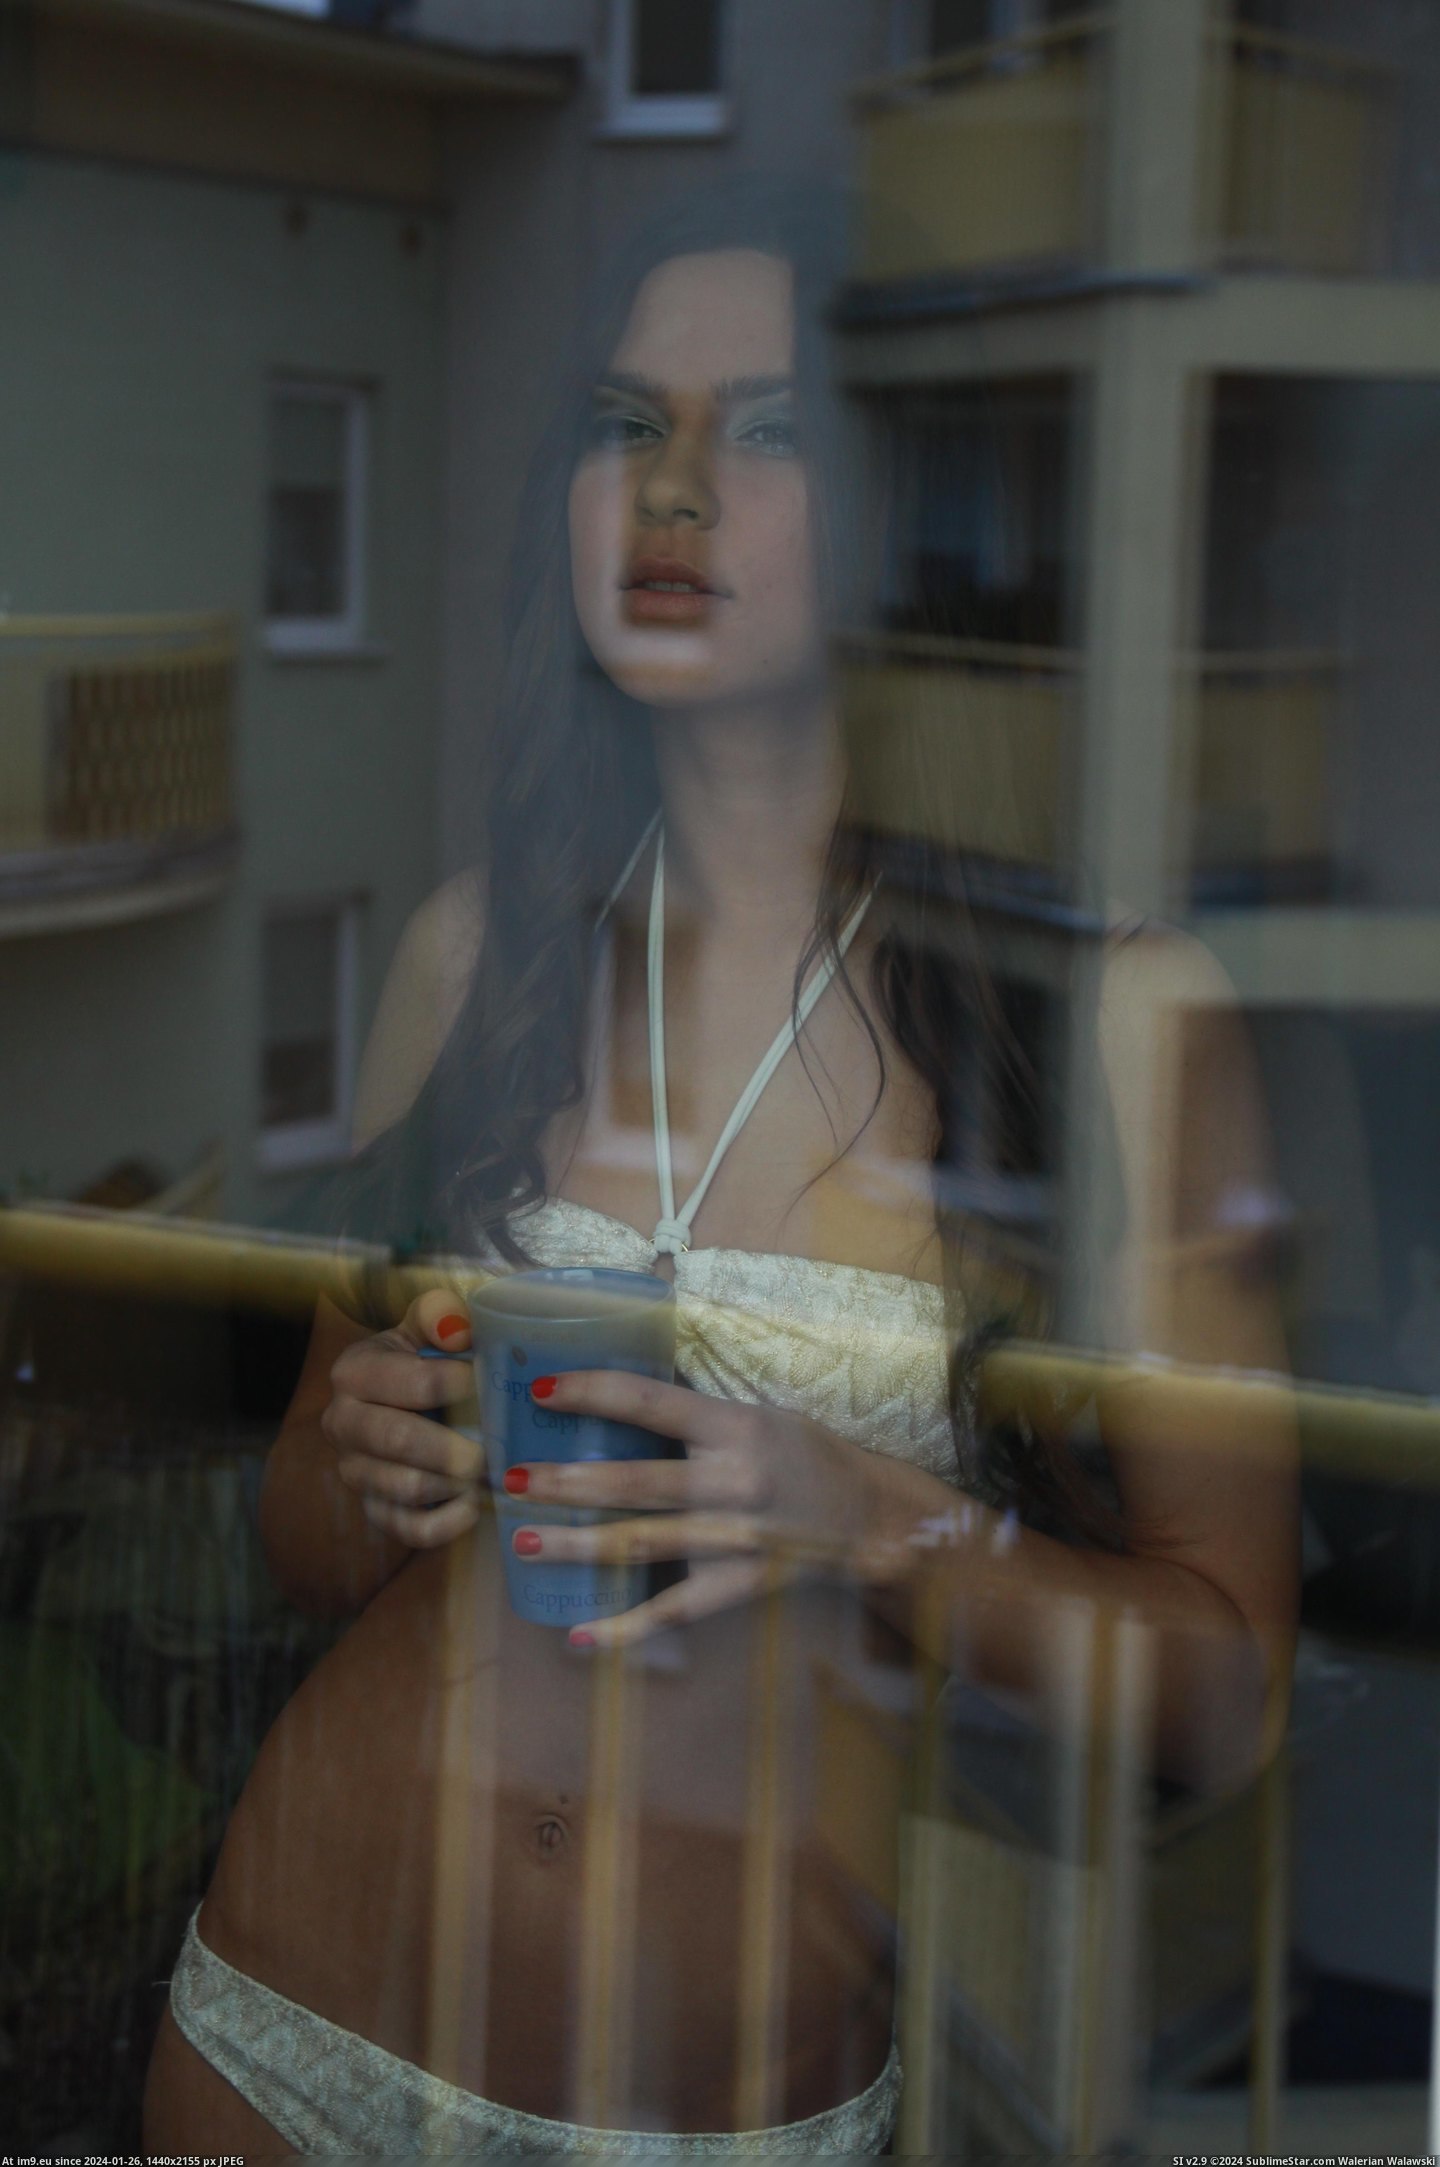 #Hot #Softcore #Arc #Nude #Models 315 - [2012] Pic. (Obraz z album Erotic Arc 2012))